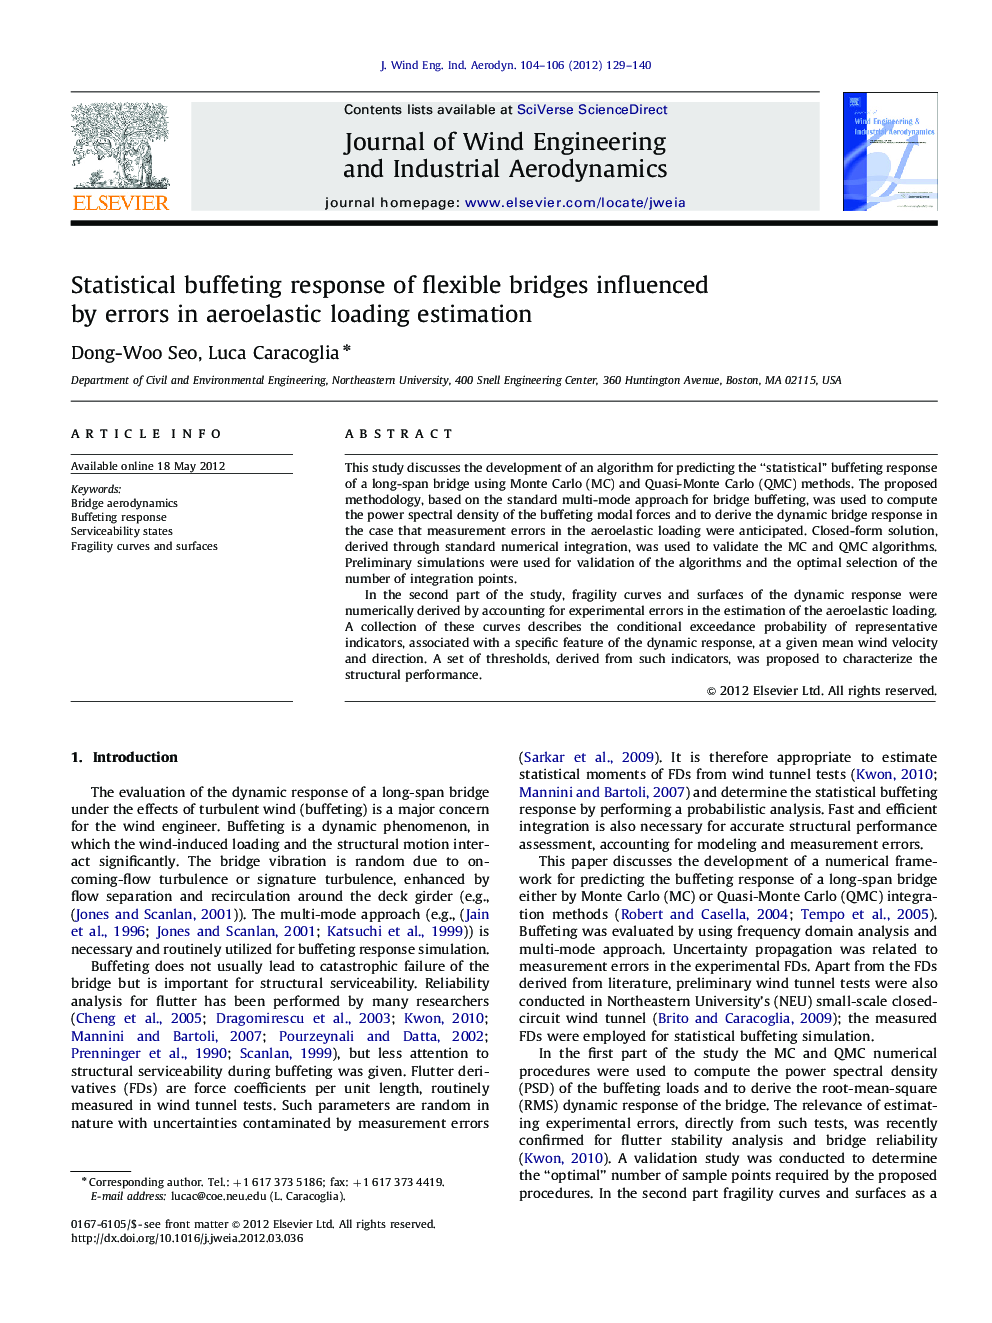 Statistical buffeting response of flexible bridges influenced by errors in aeroelastic loading estimation